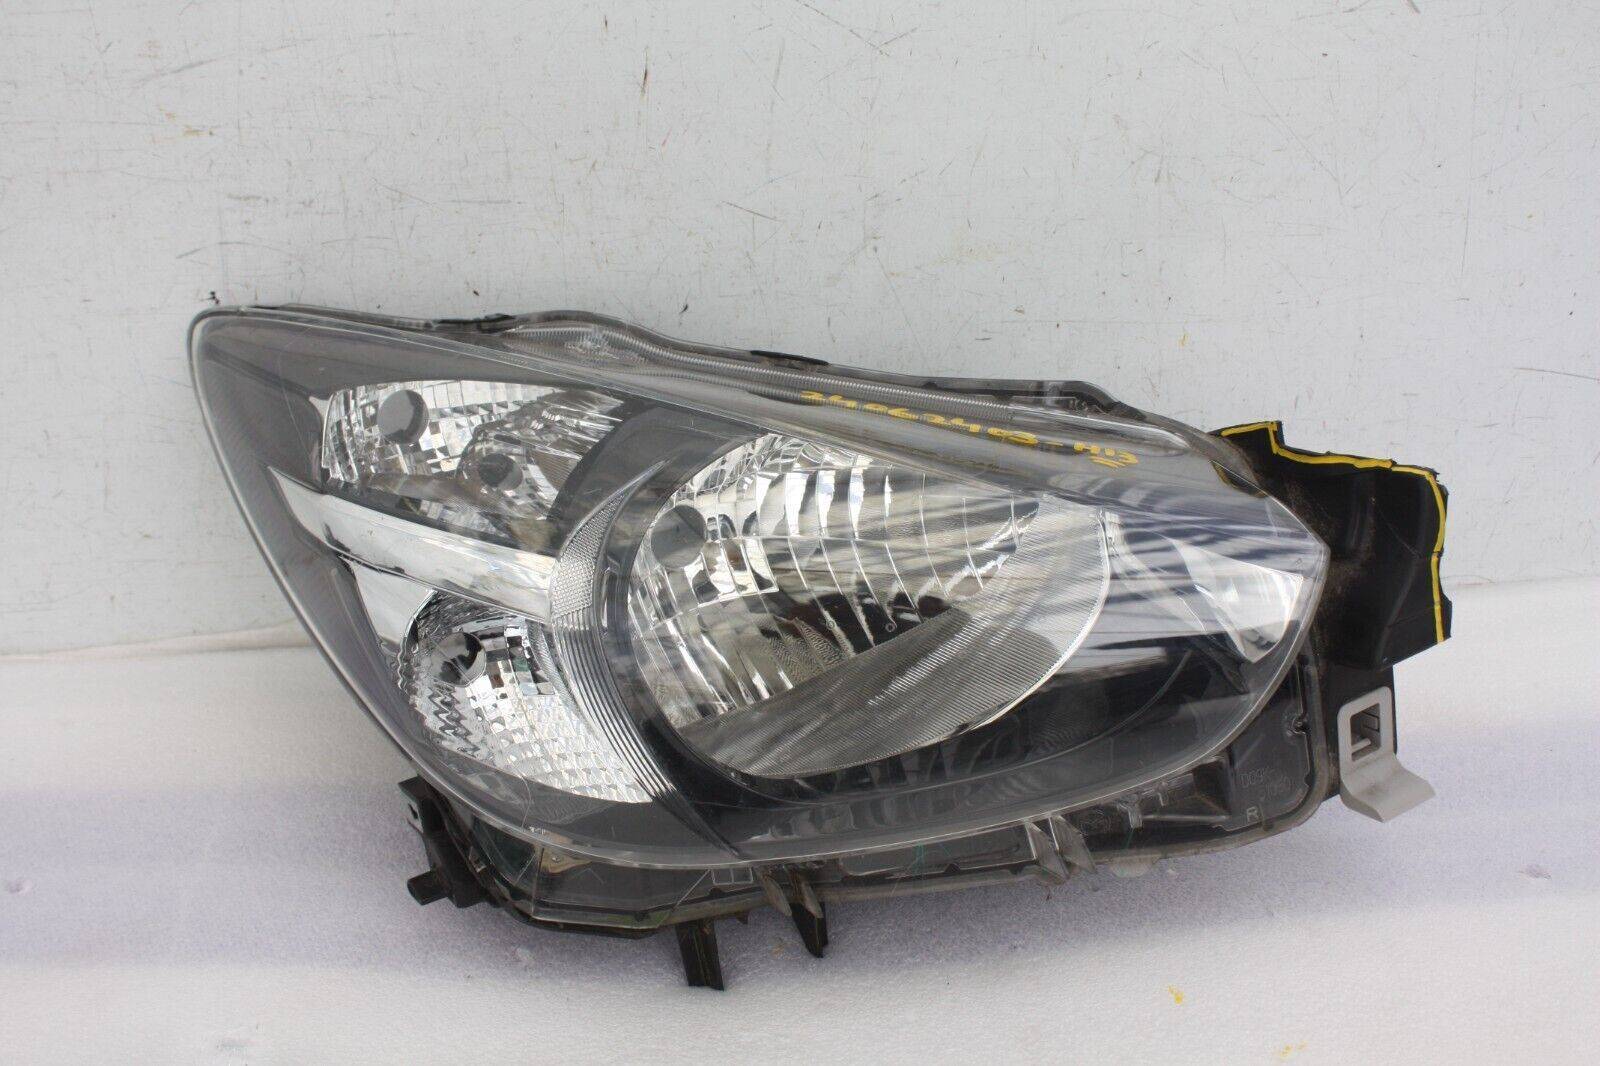 Mazda 2 Right Side Headlight D09K 51030 Genuine DAMAGED 176440327676